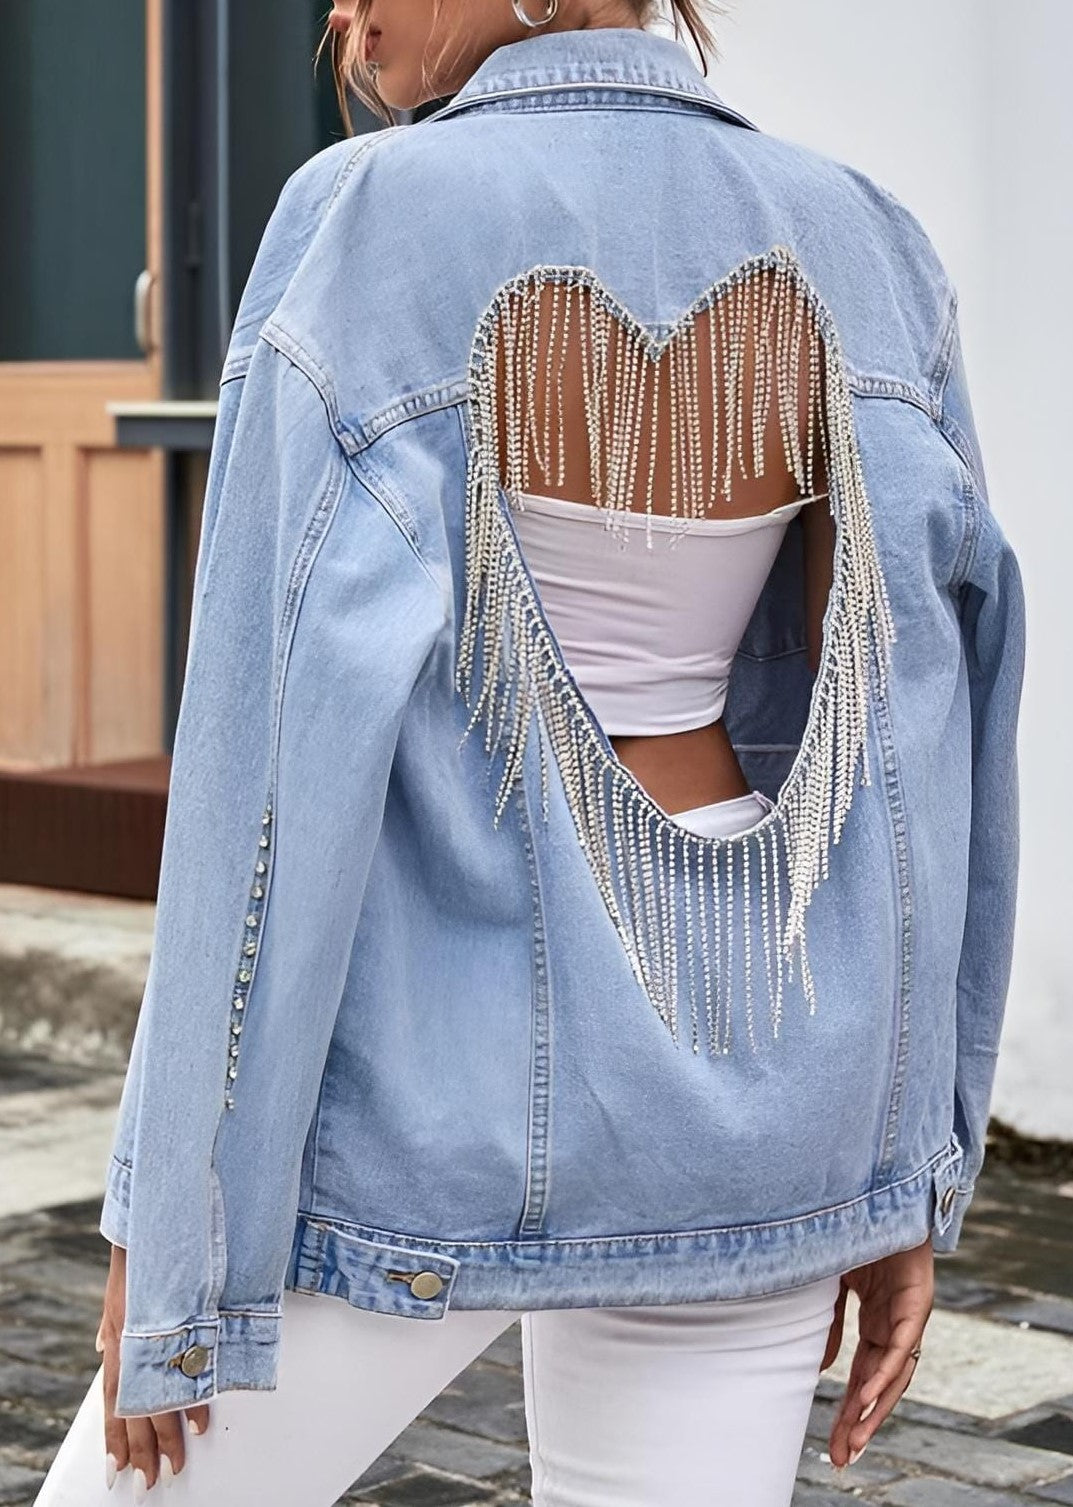 Giacca Donna Capospalla Jeans Cuore Frange Strass Tasche Over Size Casual - LE STYLE DE PARIS